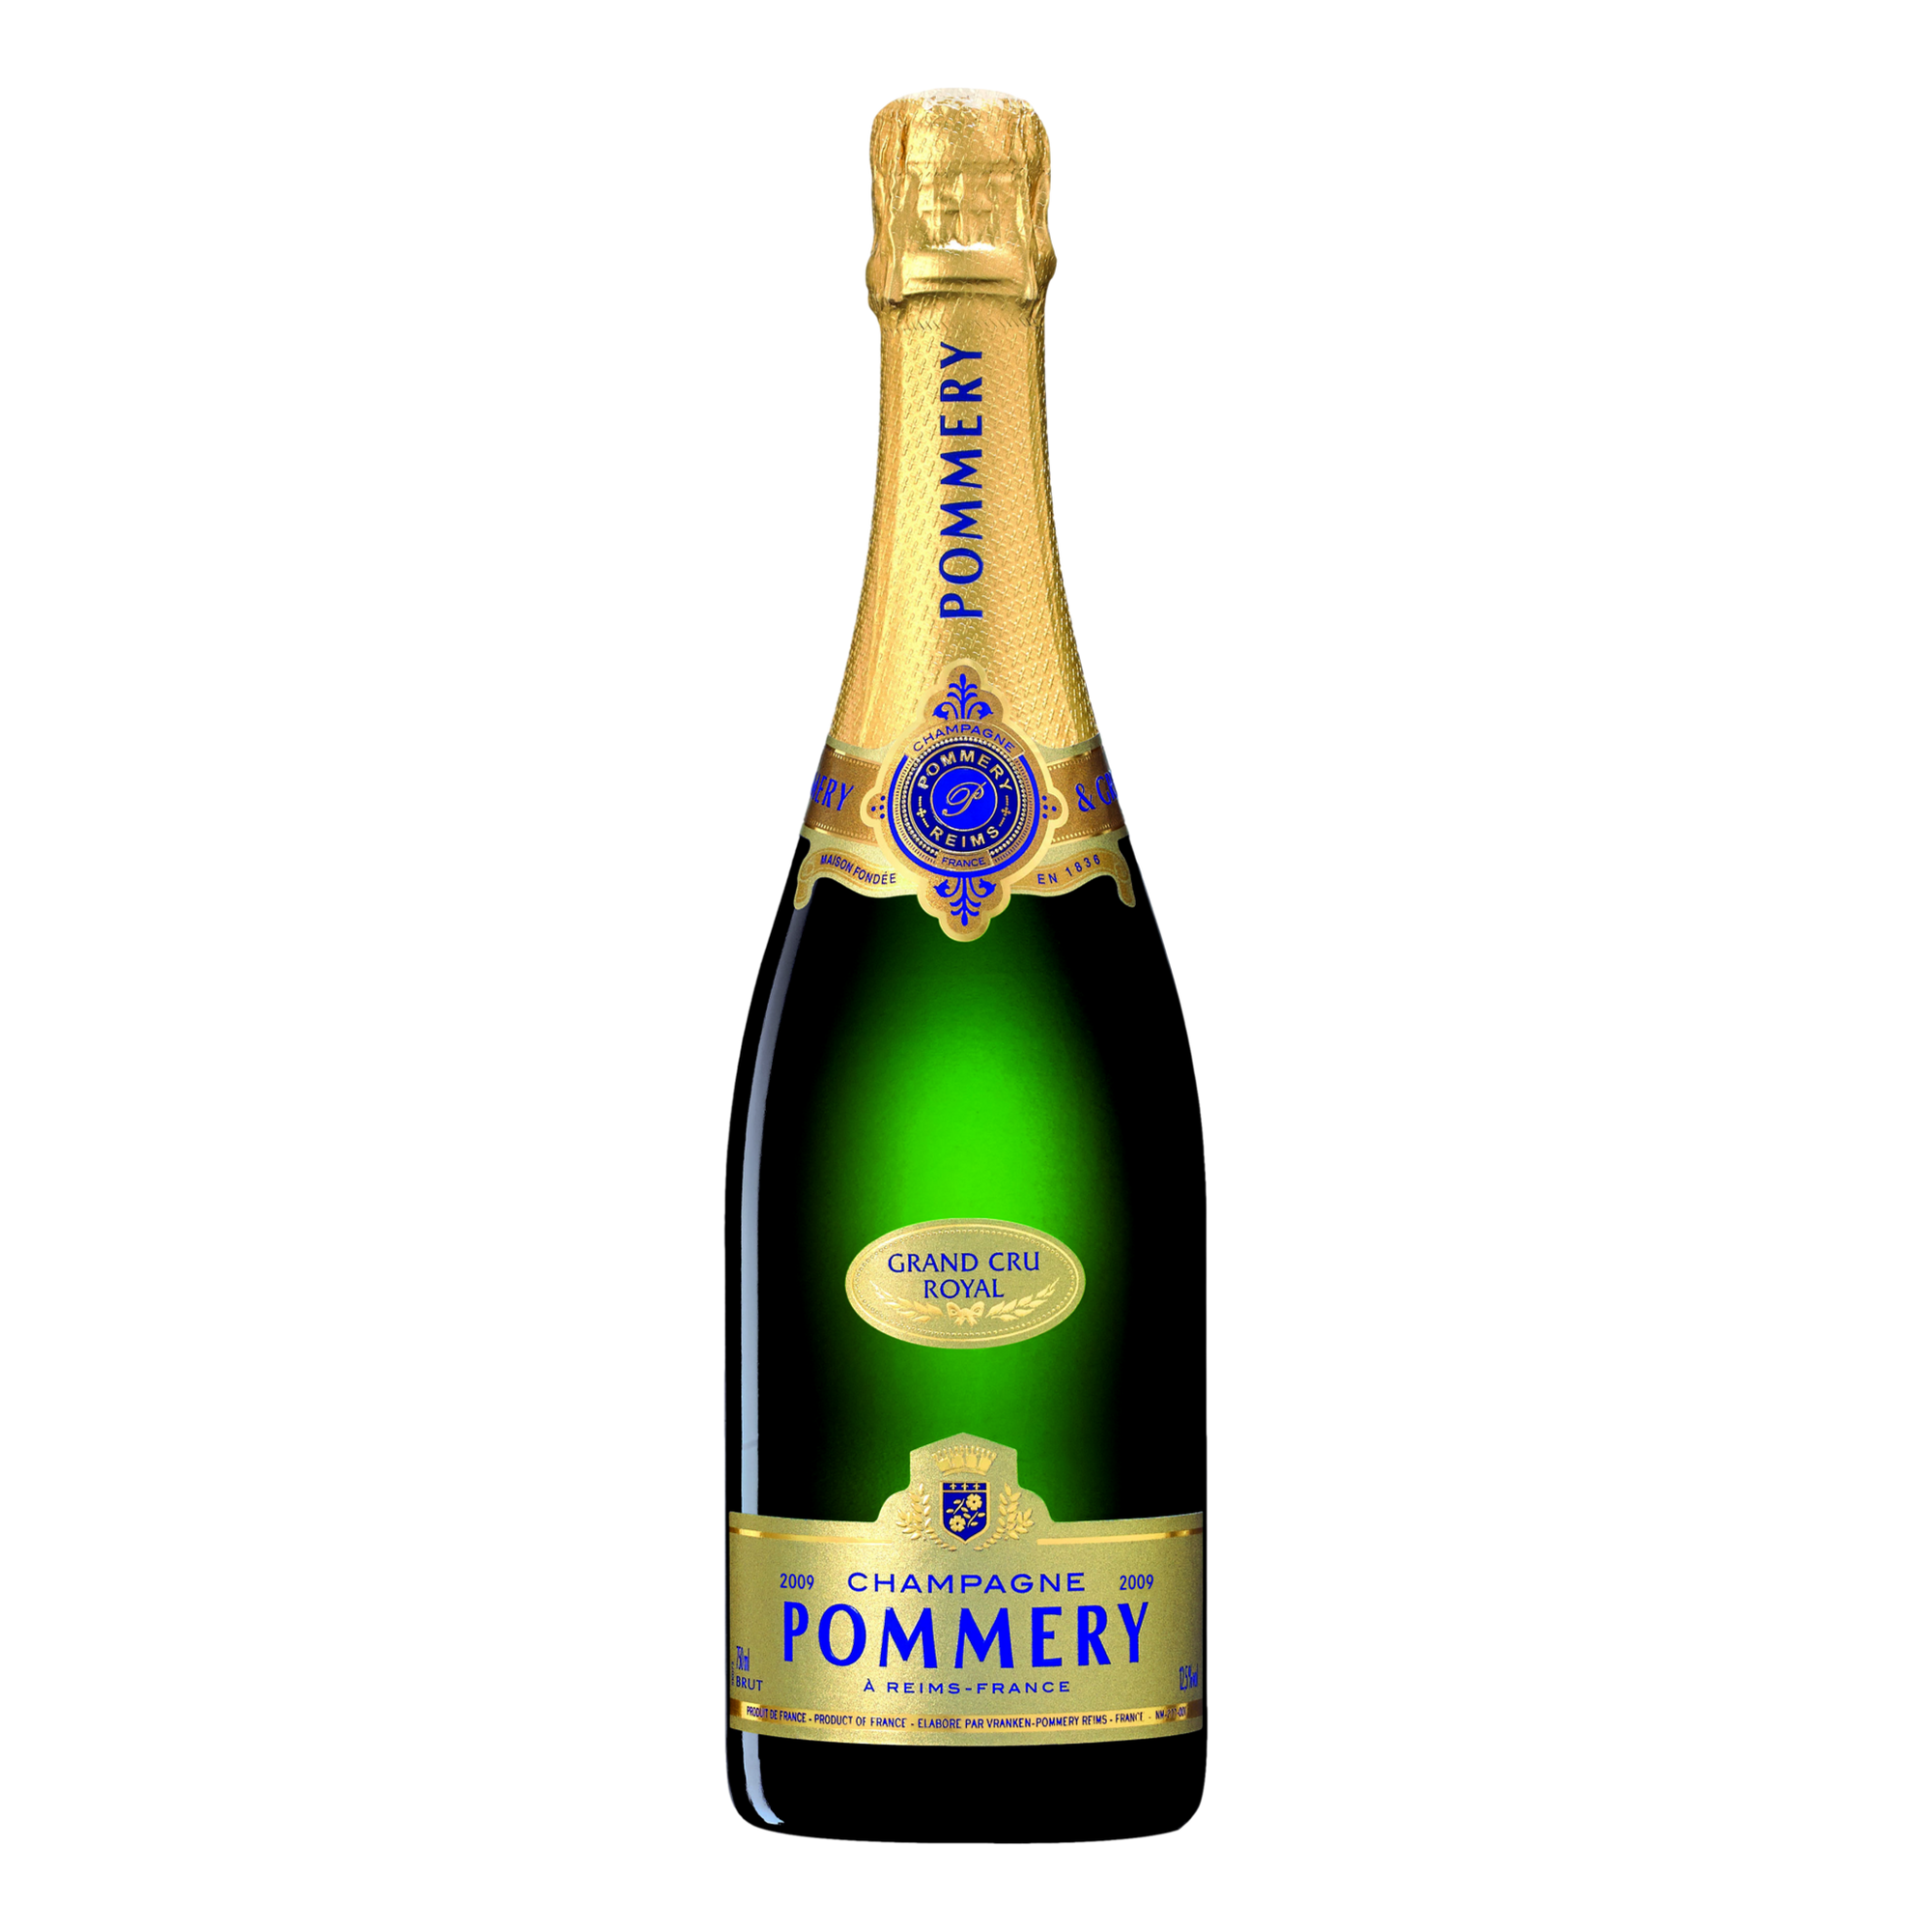 Pommery Grand Cru Champagne Vintage 2009